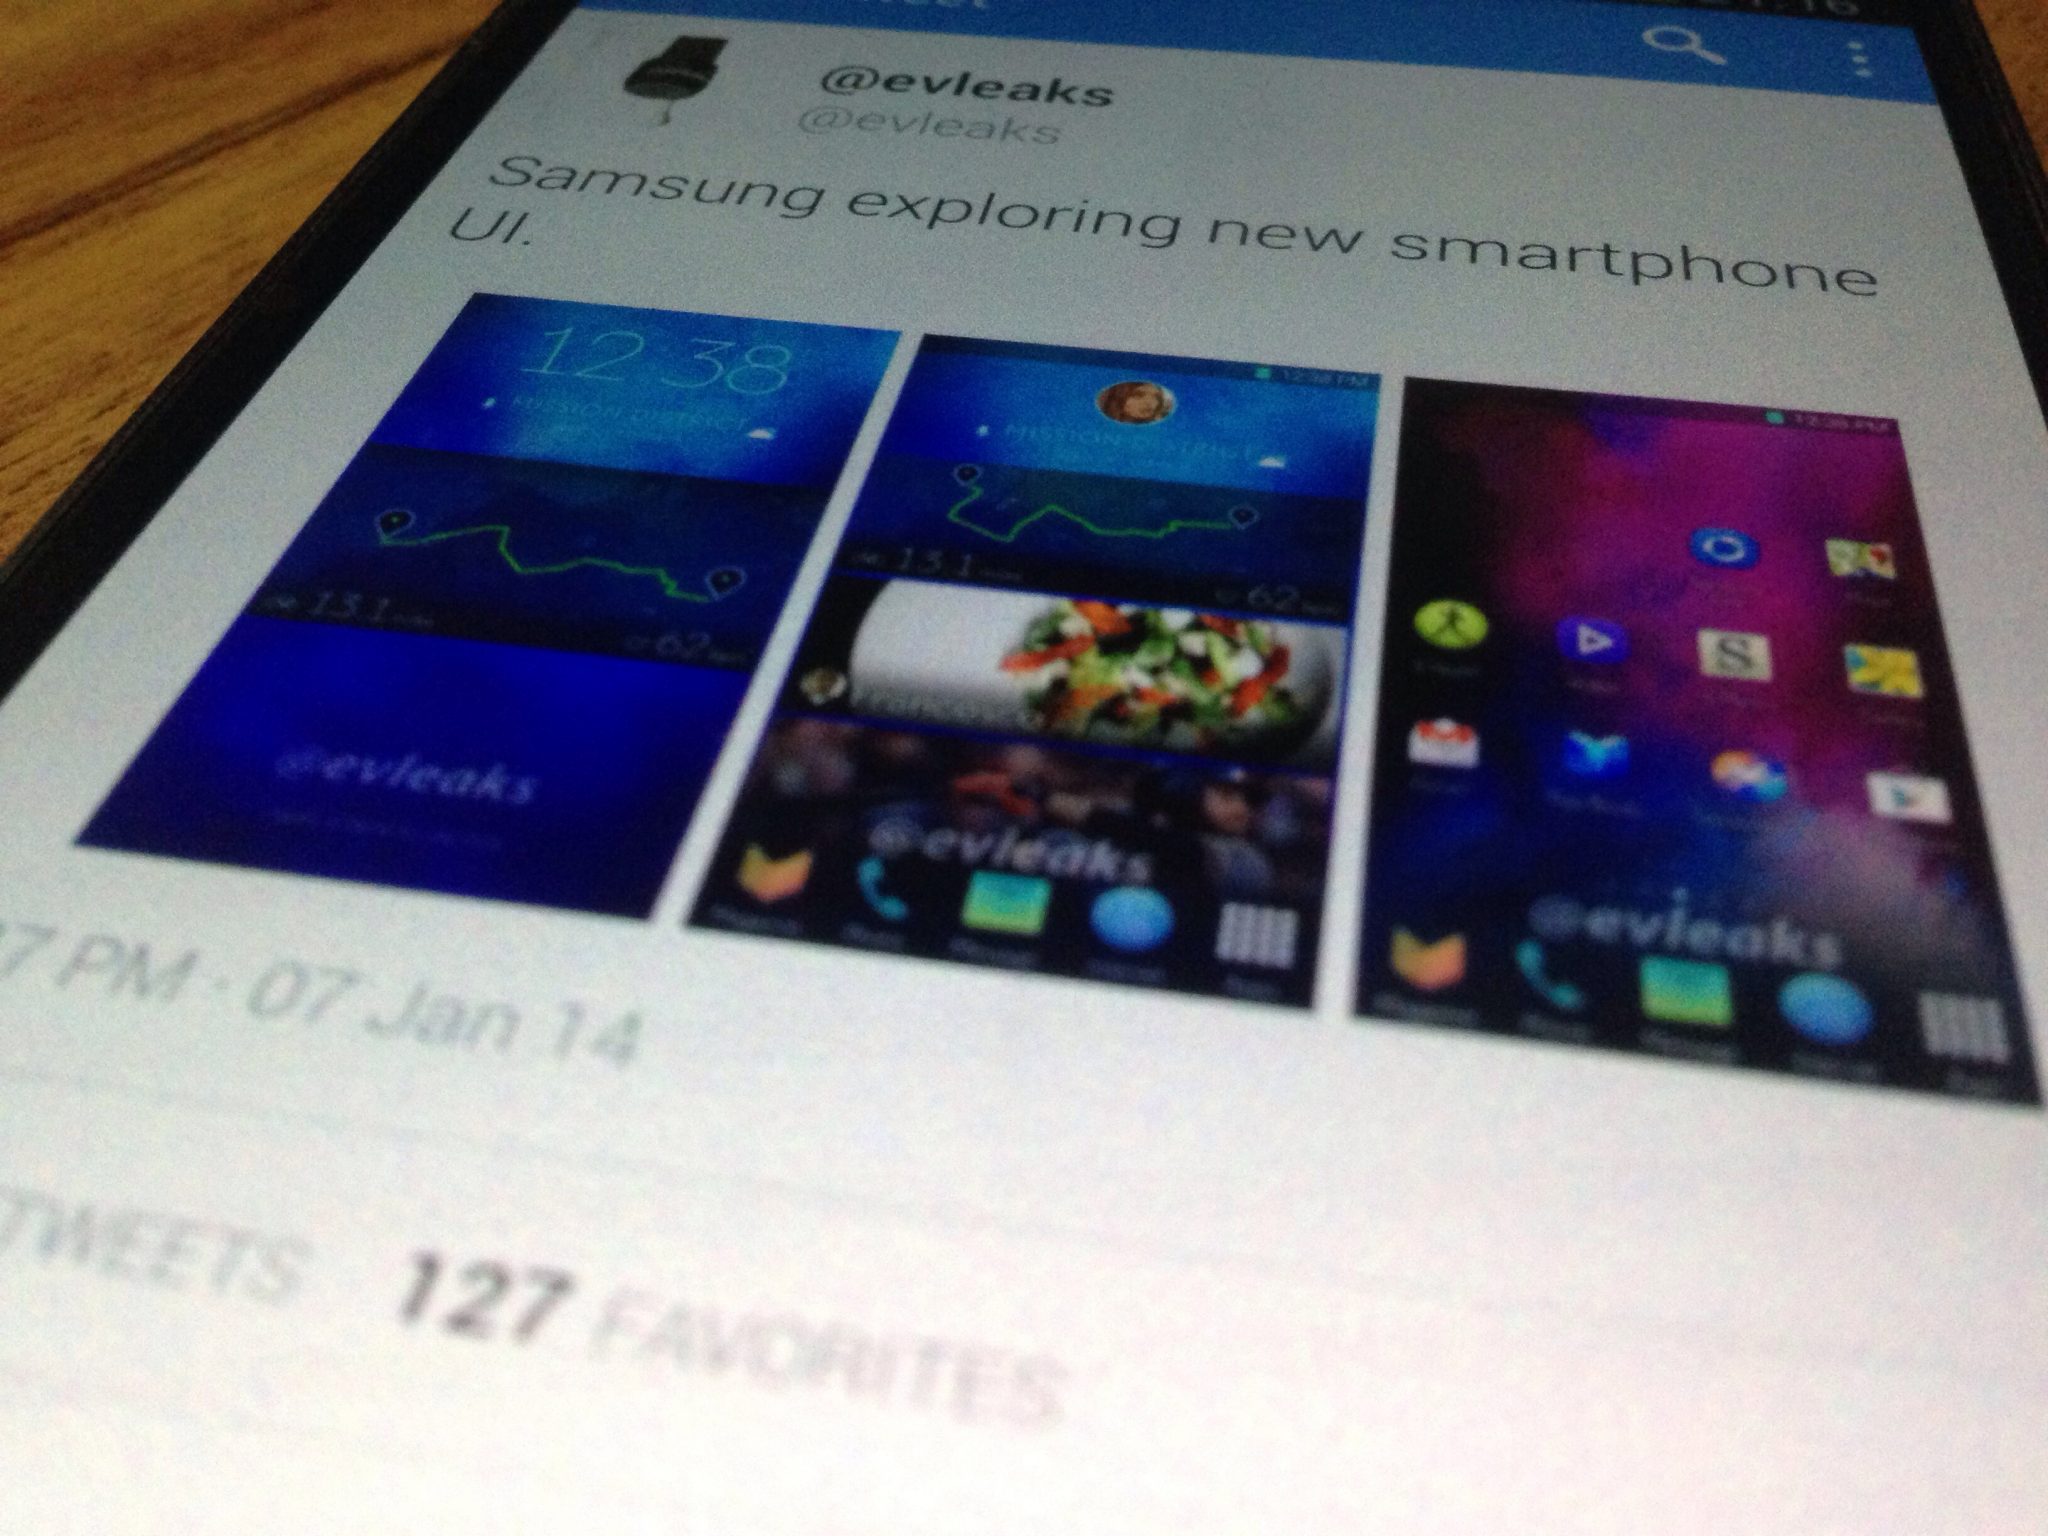 20140107 212702 - LEAKED : Samsung's new Touchwiz UI